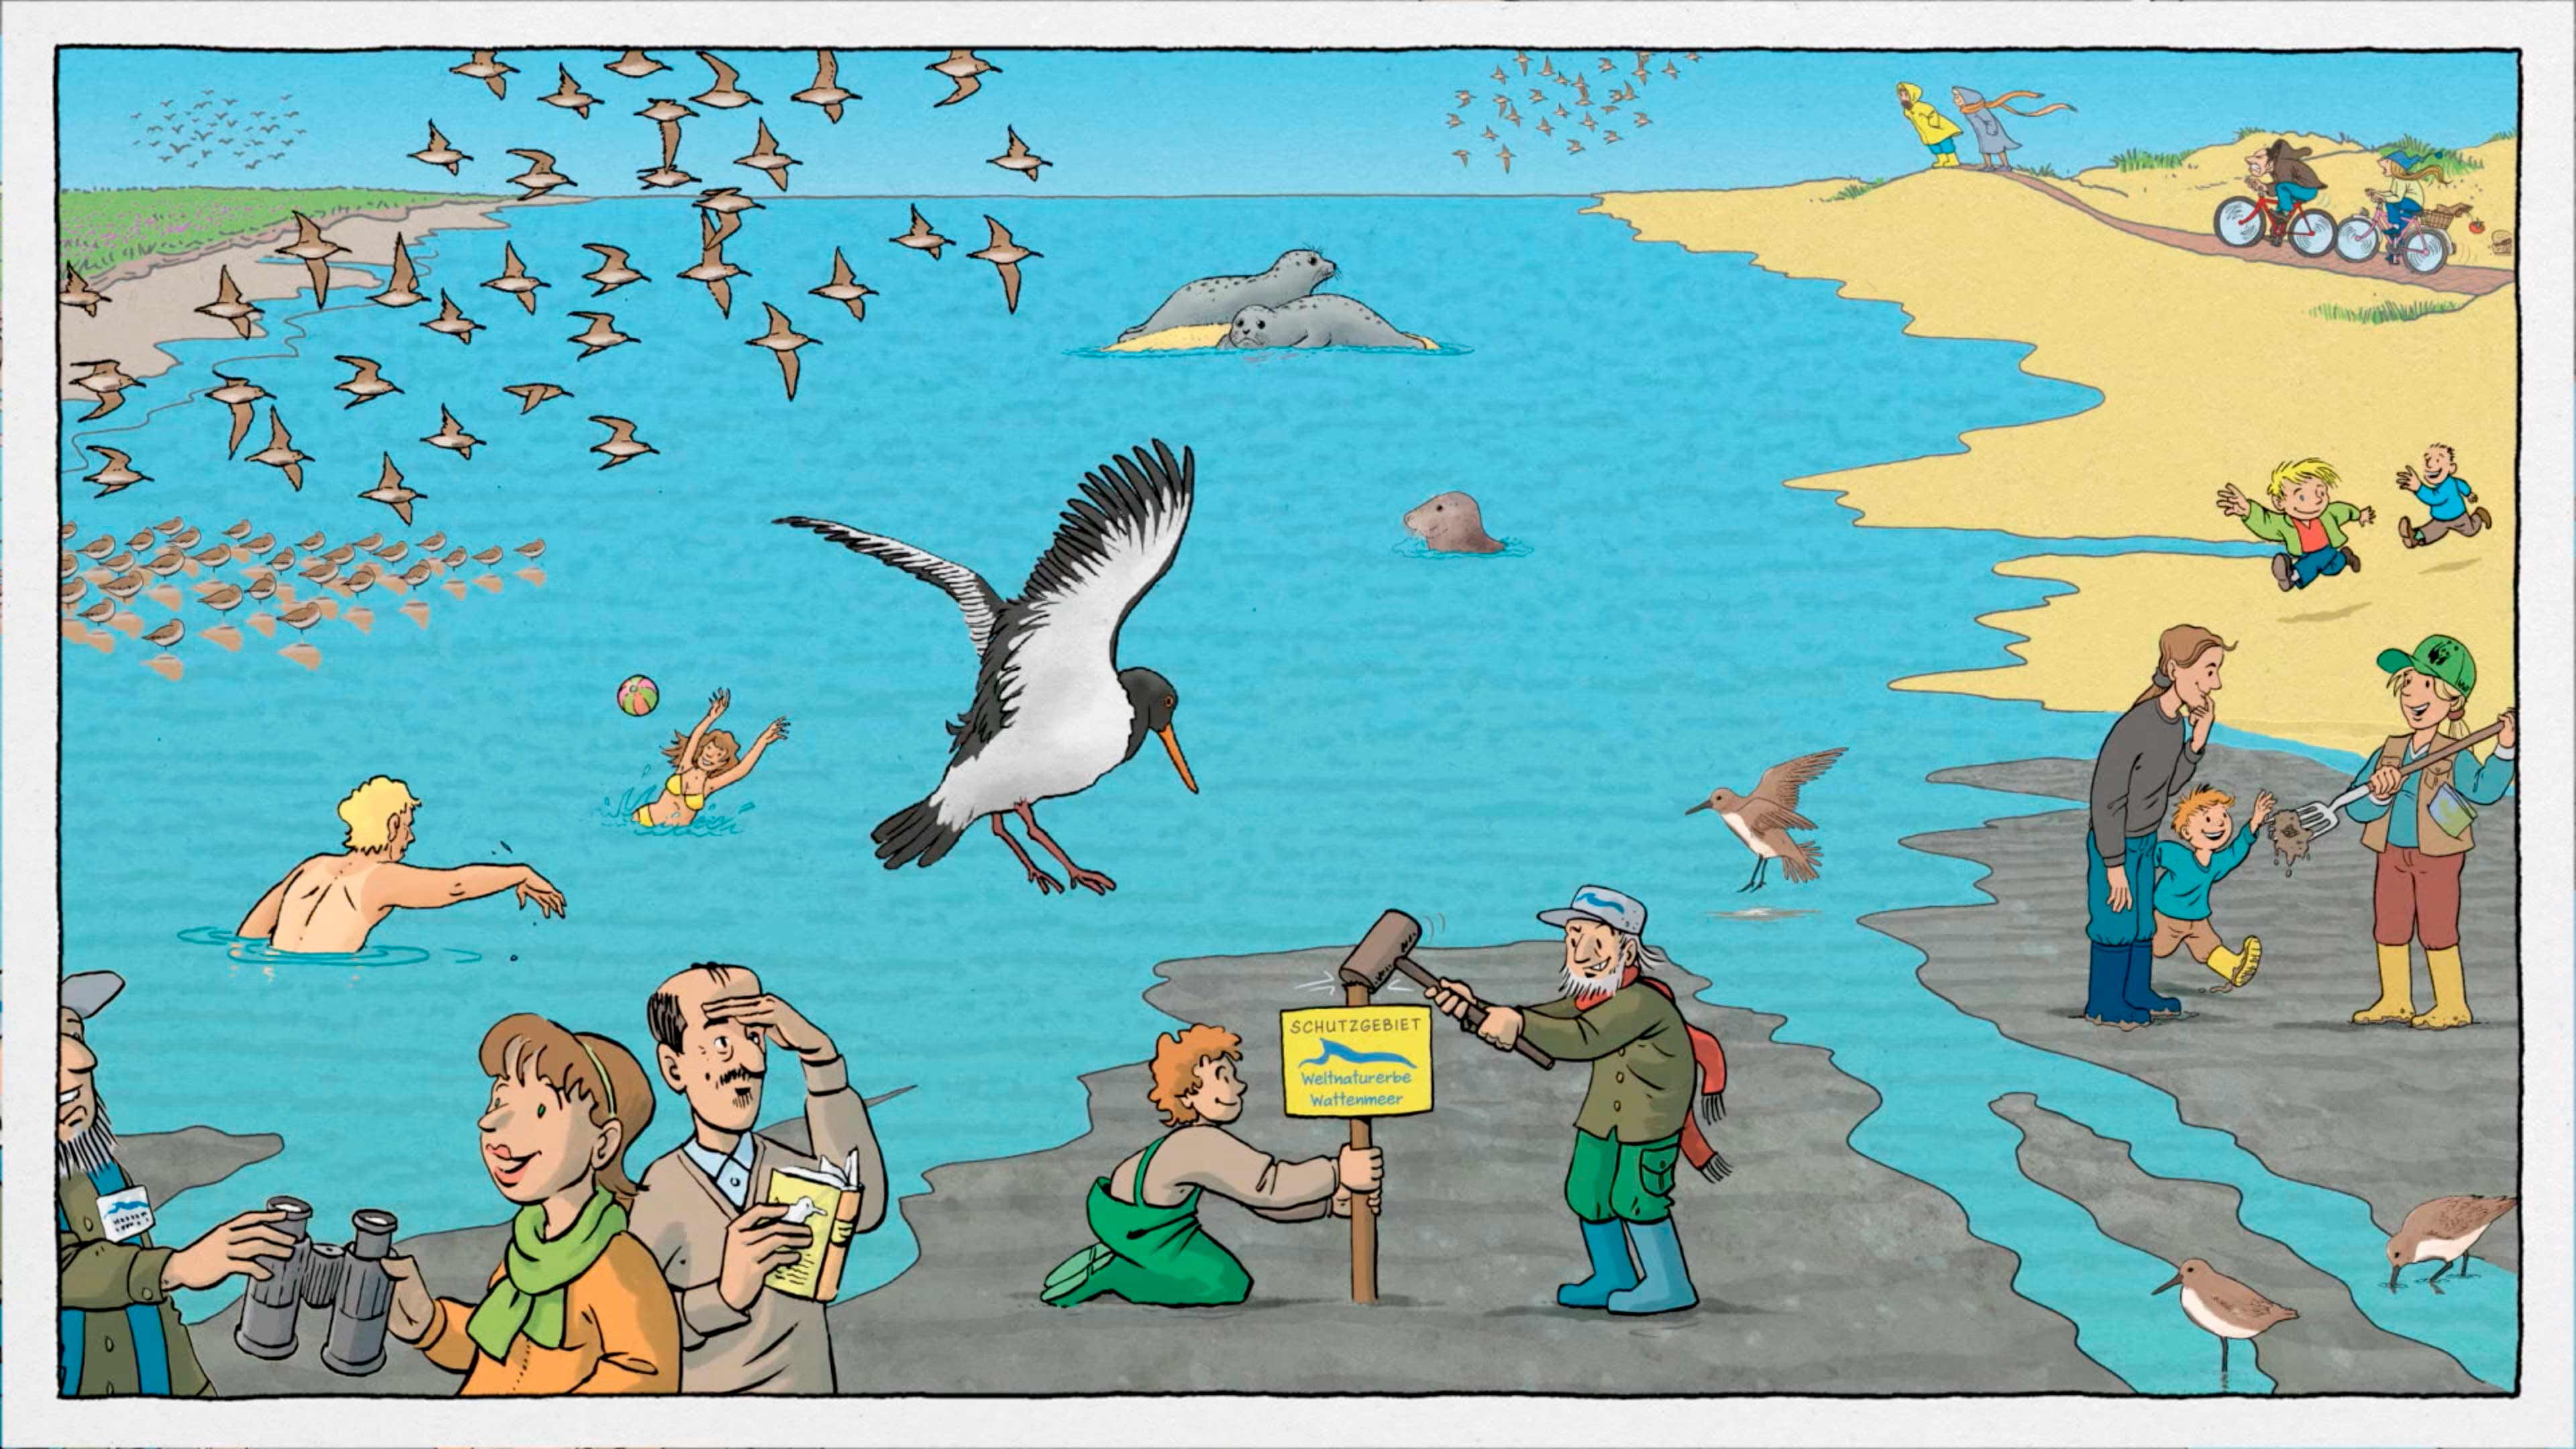 Comic Illustration vom WWF Wattenmeer